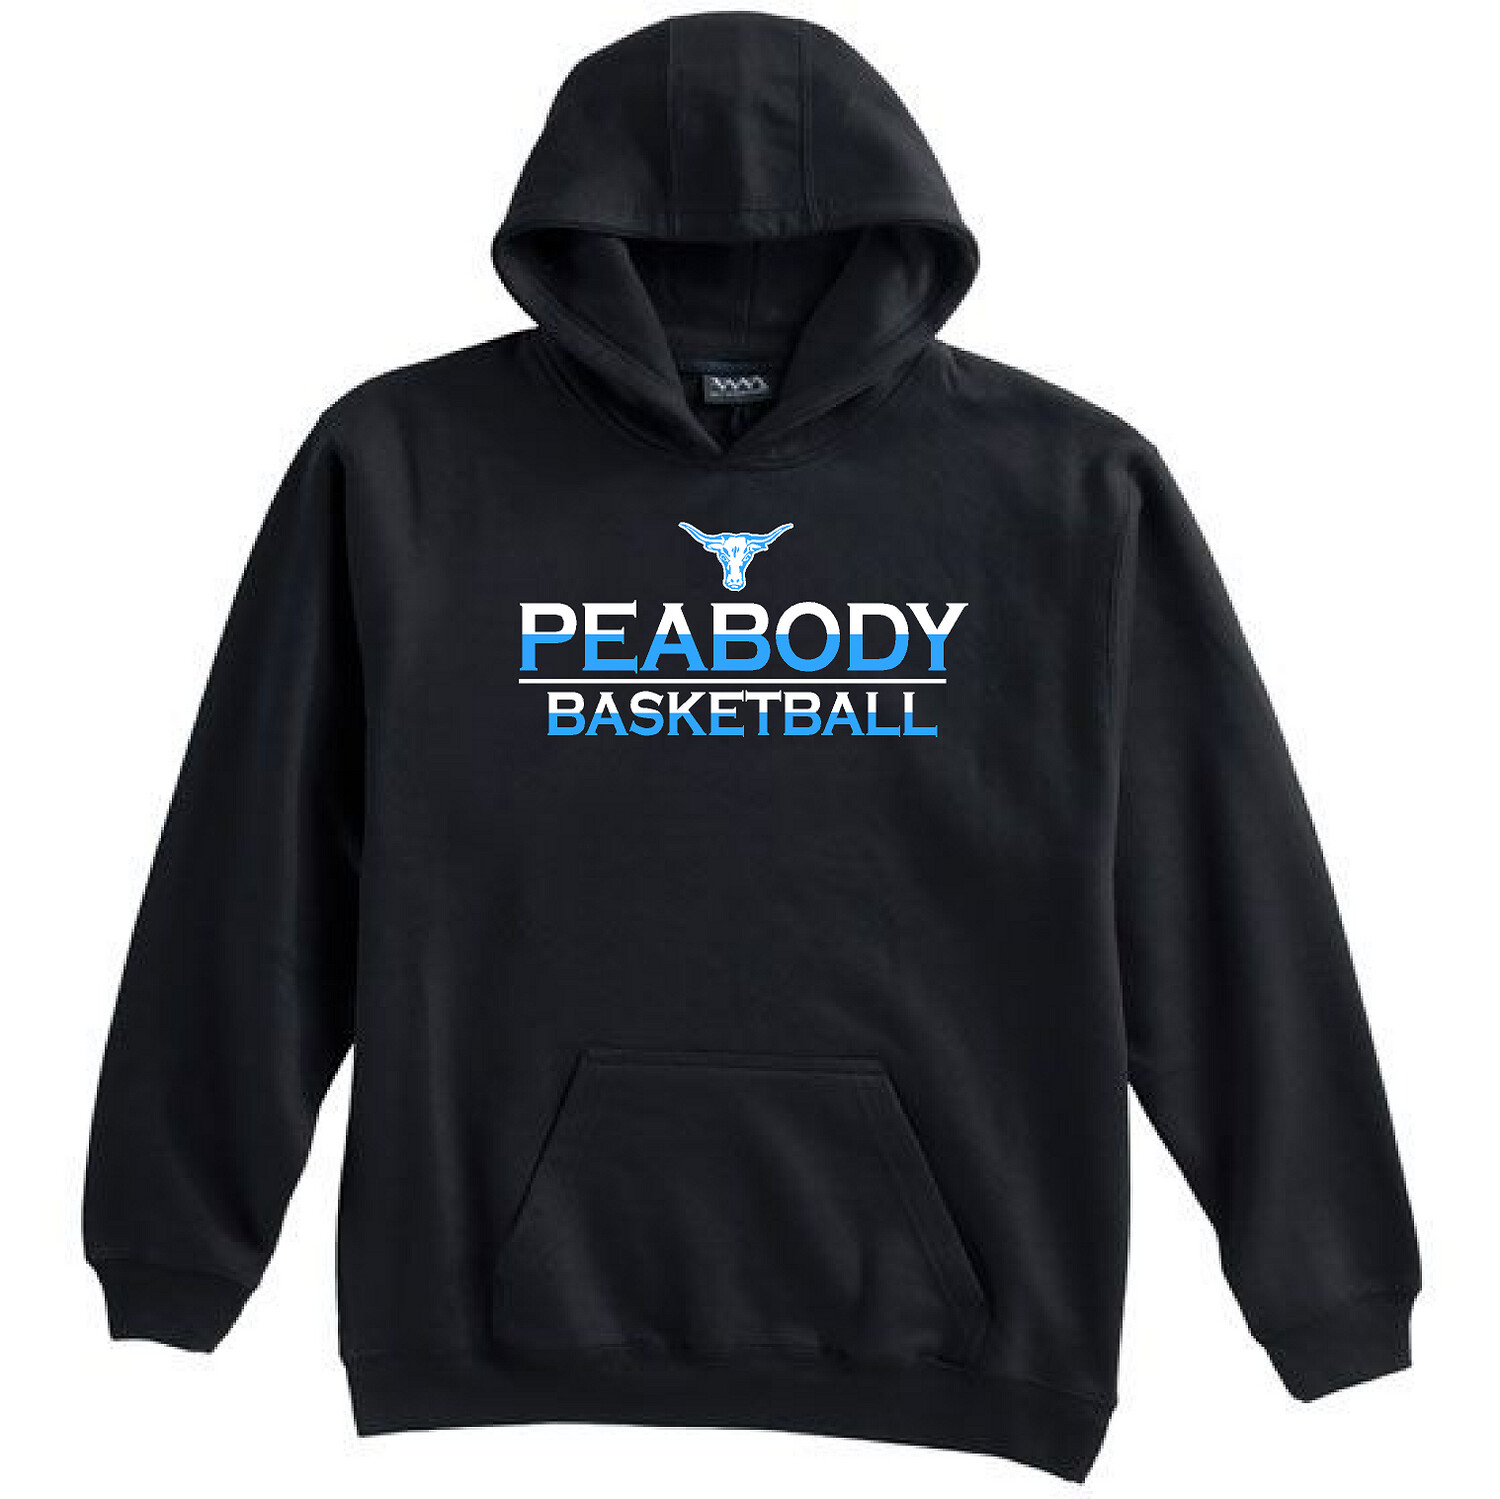 Pennant Brand Peabody Basketball Hooded Sweatshirt 2.0